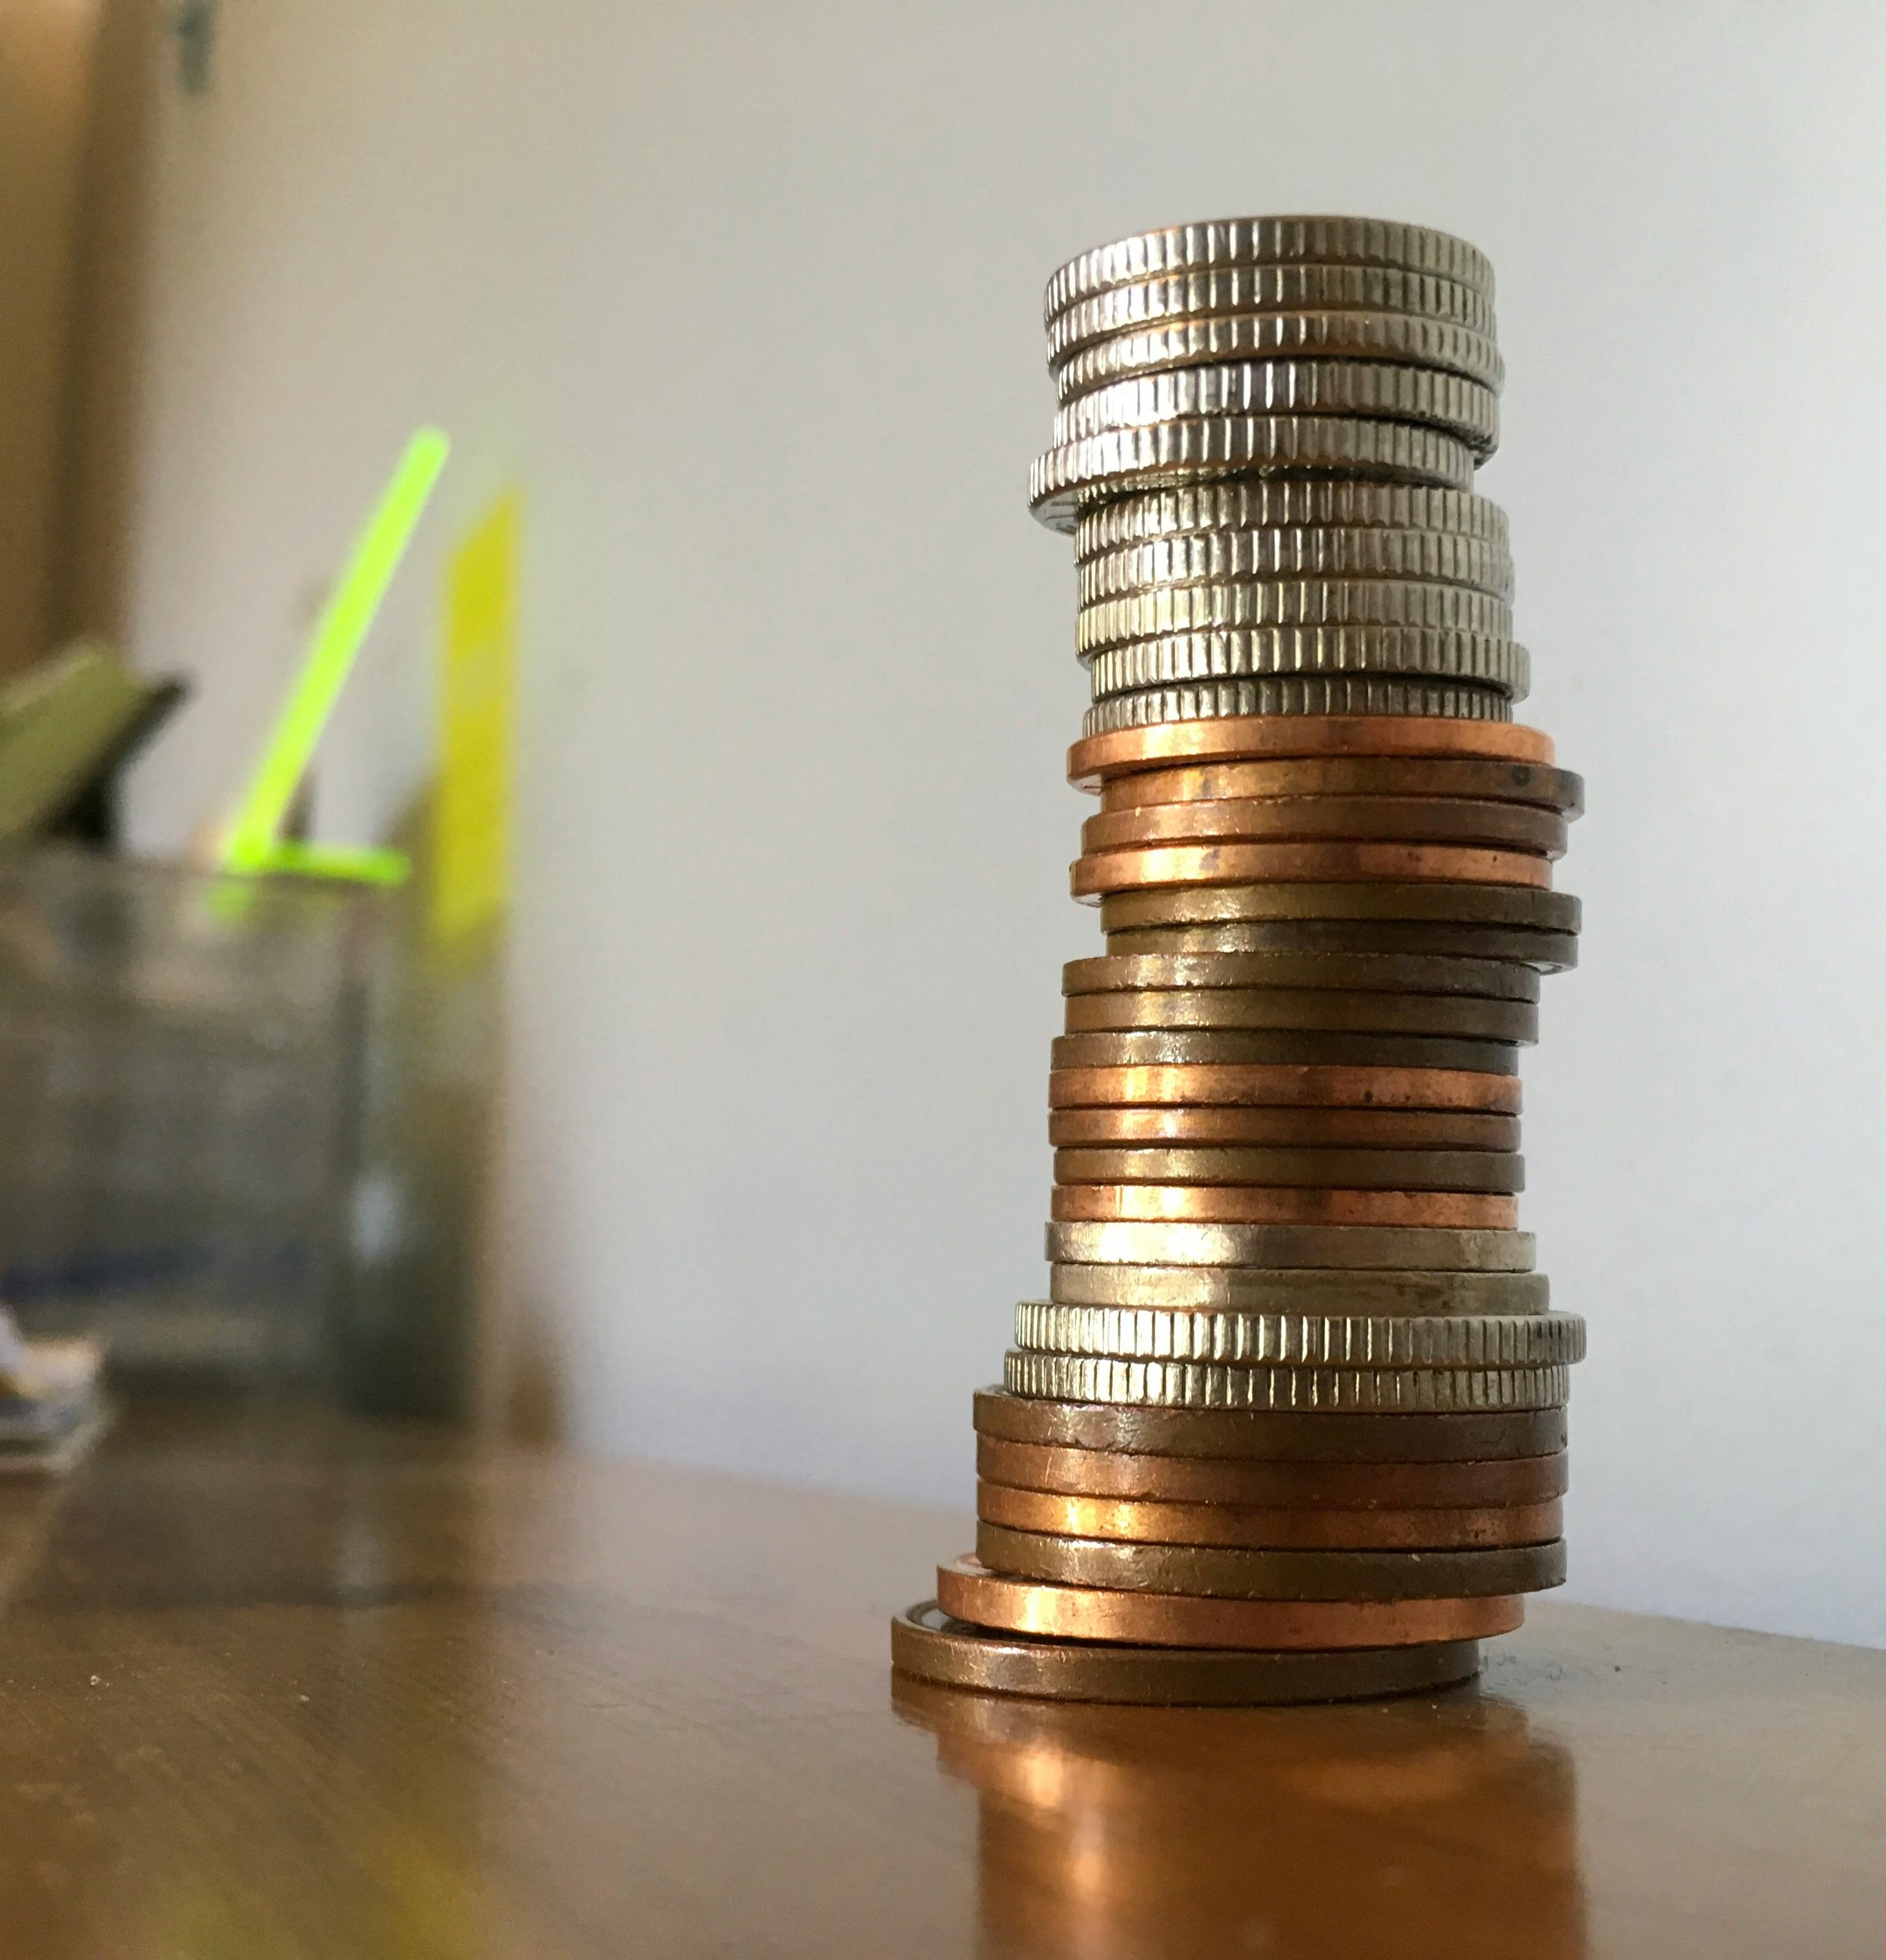 Free stock photo of coins, money, money making